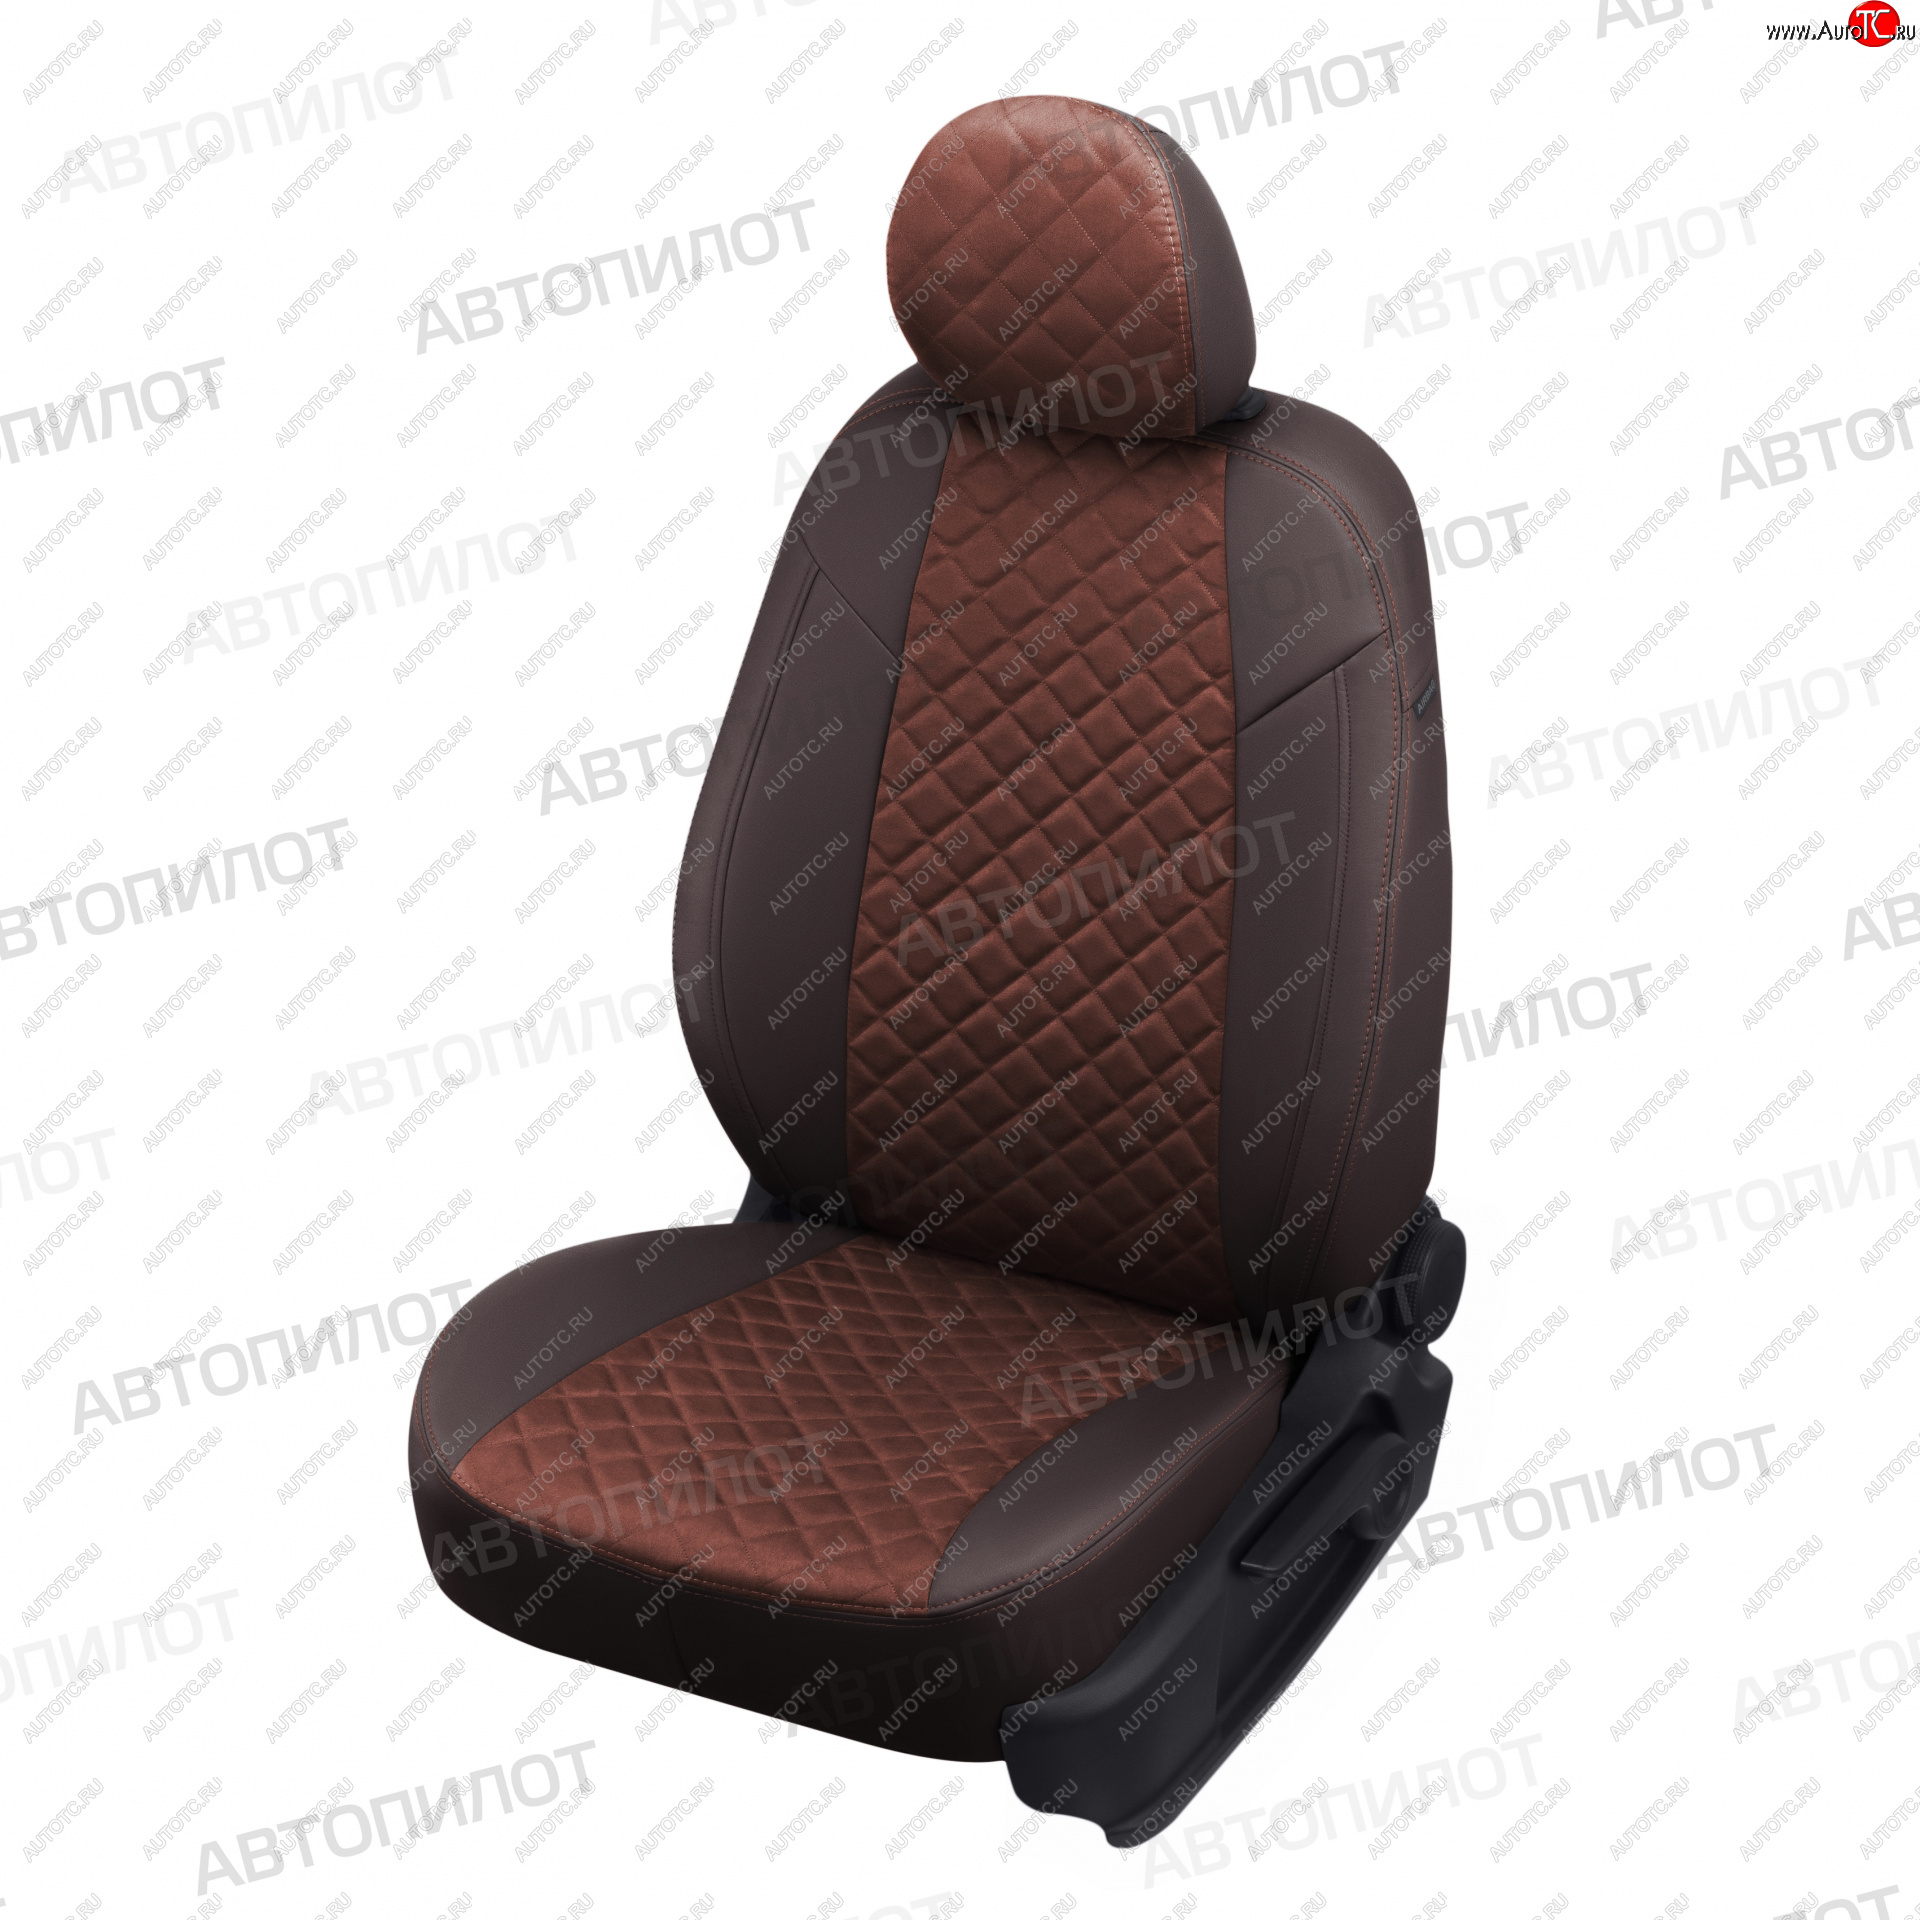 13 999 р. Чехлы сидений (экокожа/алькантара, сплошн.) Автопилот Ромб  BMW 5 серия  E60 (2003-2010) (шоколад)